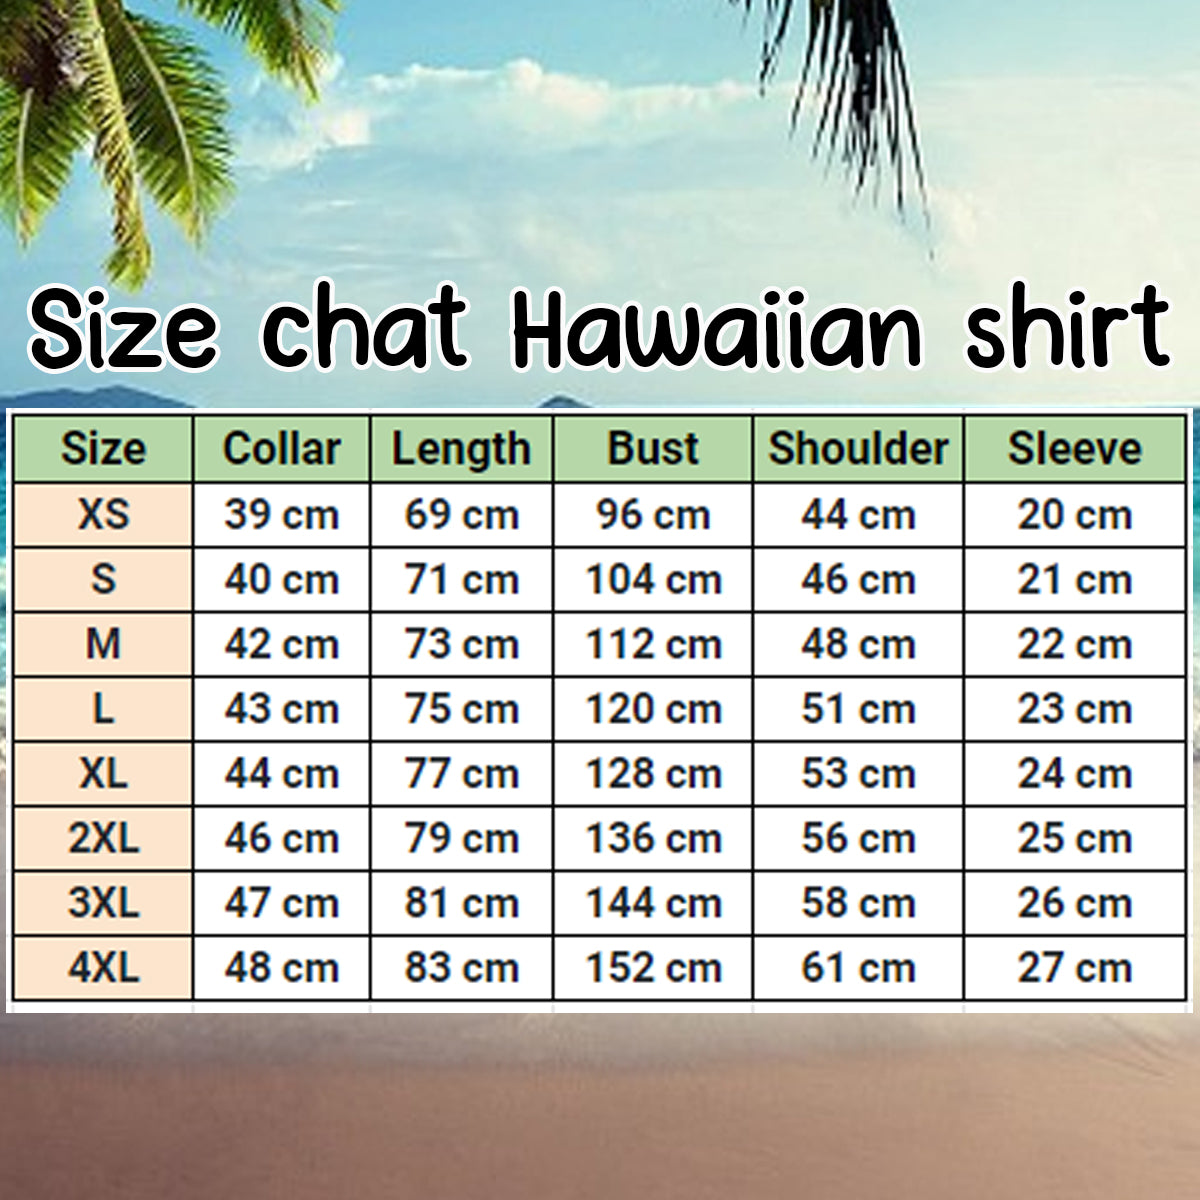 Summer Dog Watercolor Hawaiian Shirt/ Summer aloha hawaii shirt for Men women